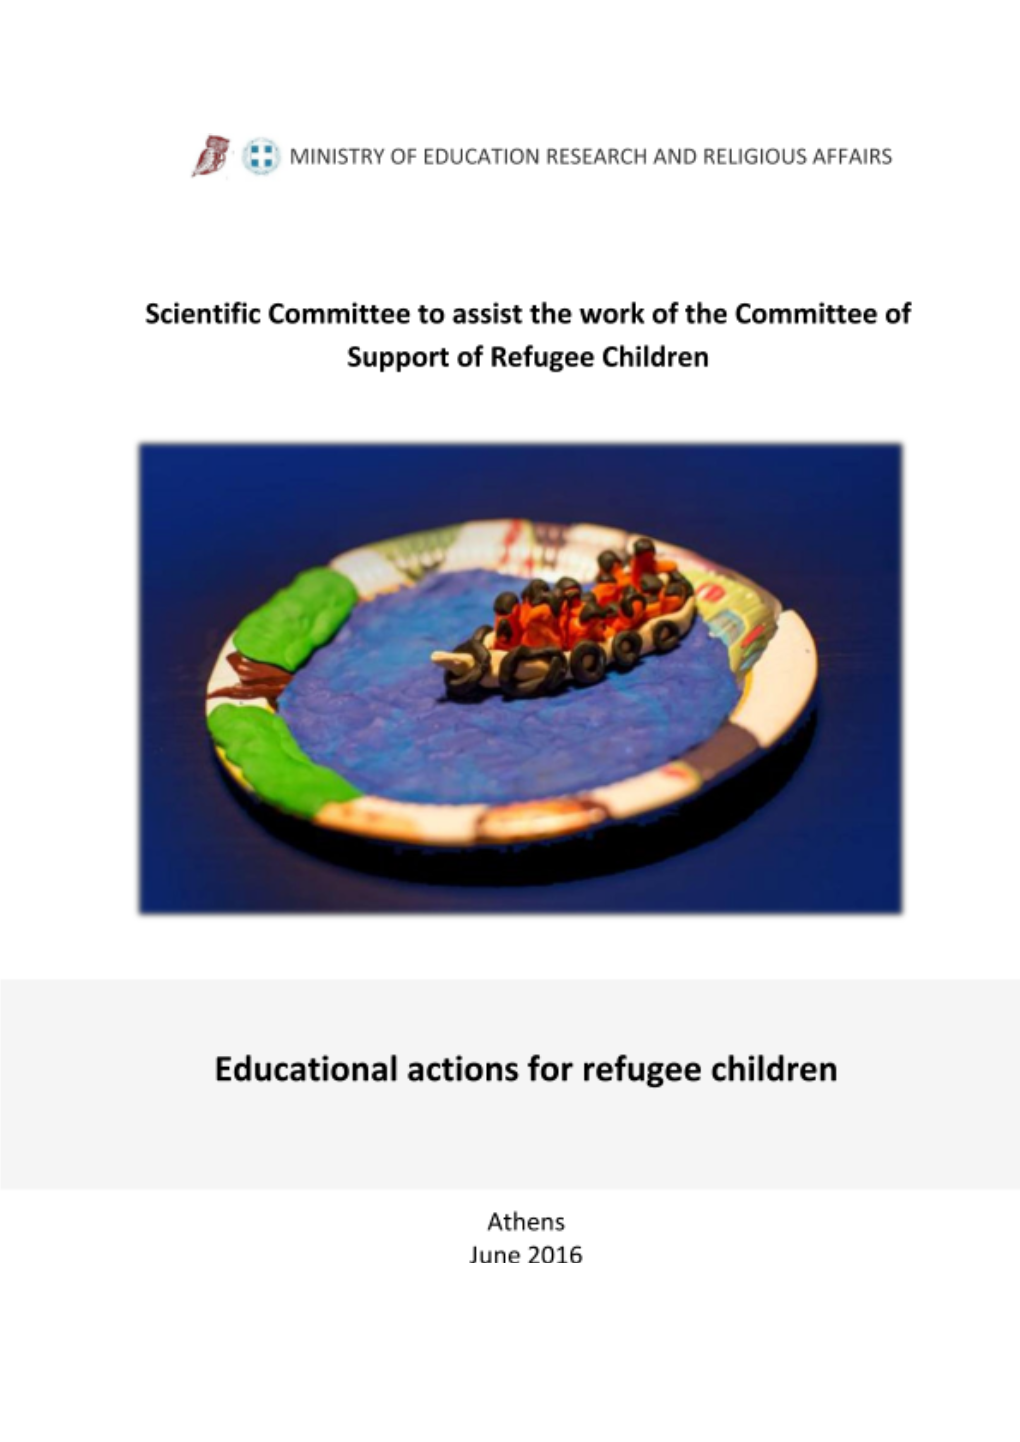 Educational Actions for Refugee Children - June 2016